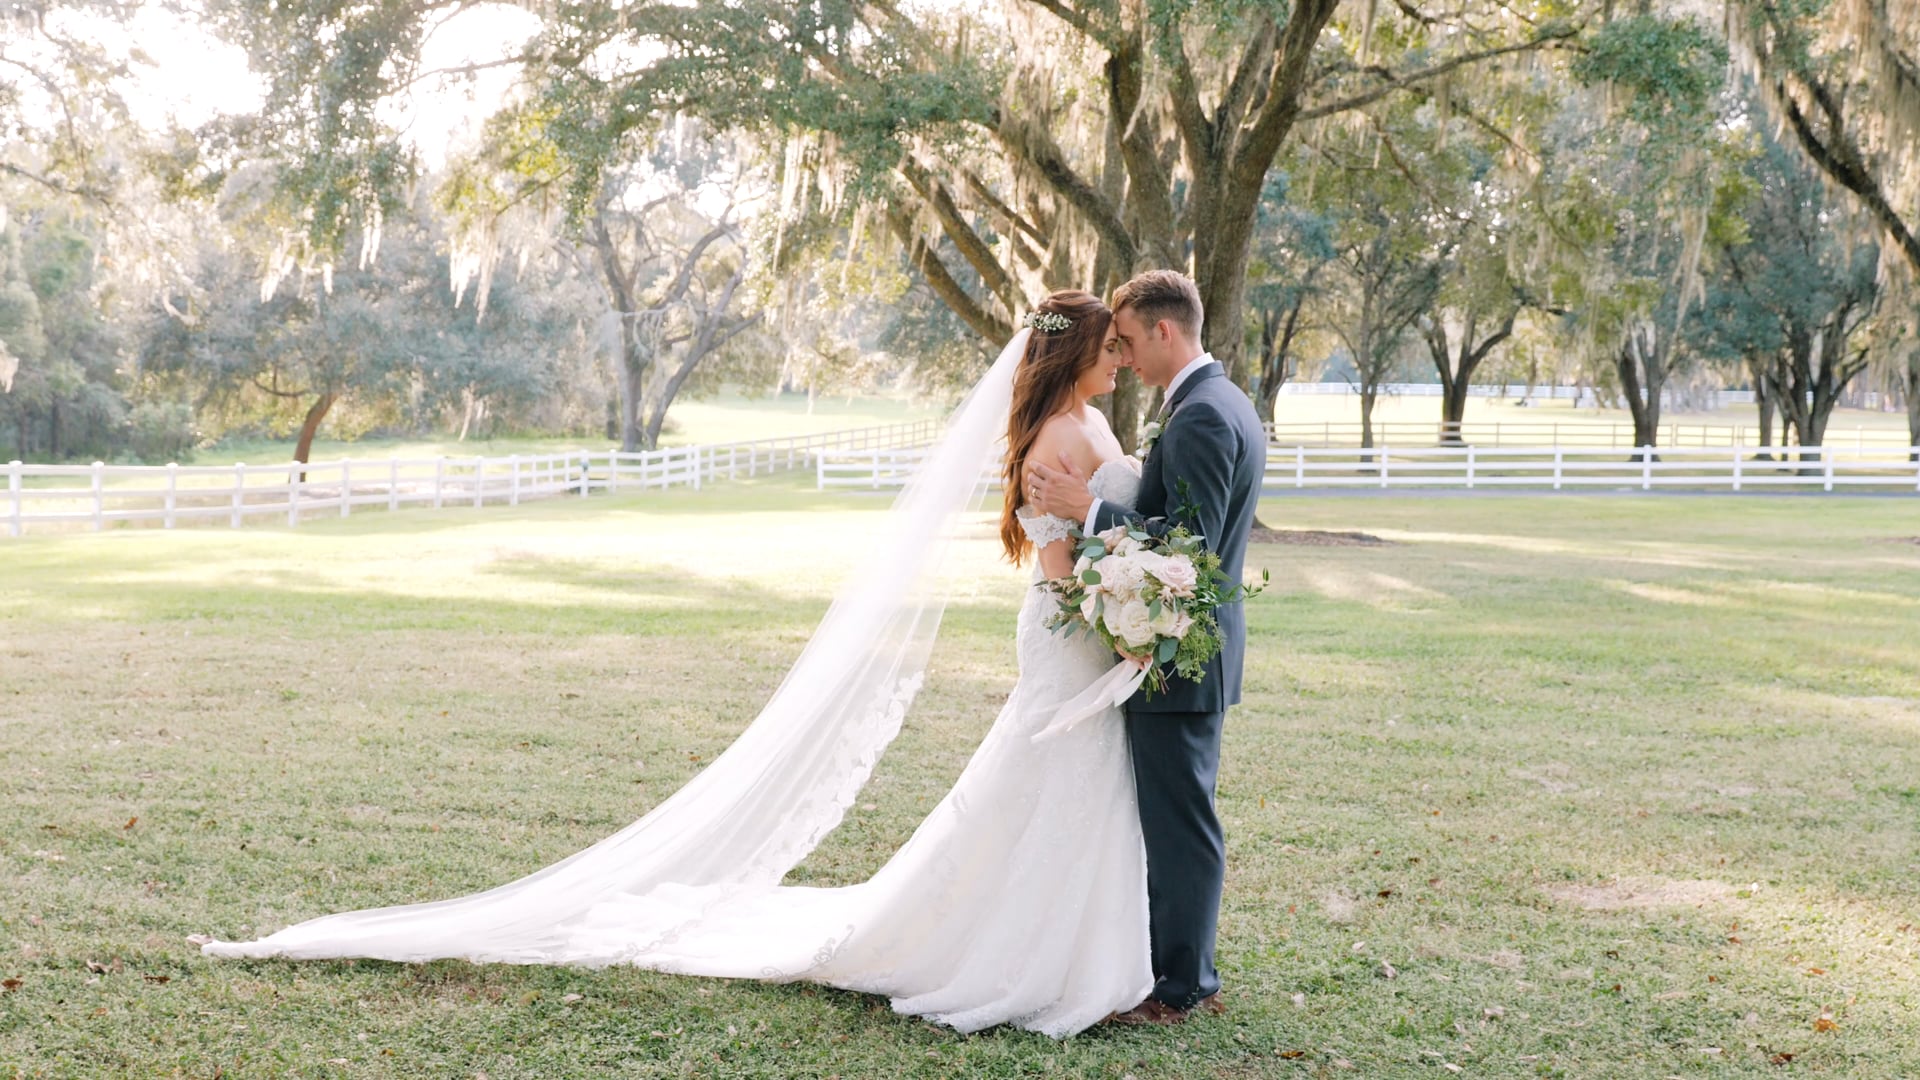 Caroline & Zach // Wedding Video Trailer at Stonebridge in Dade City, Florida